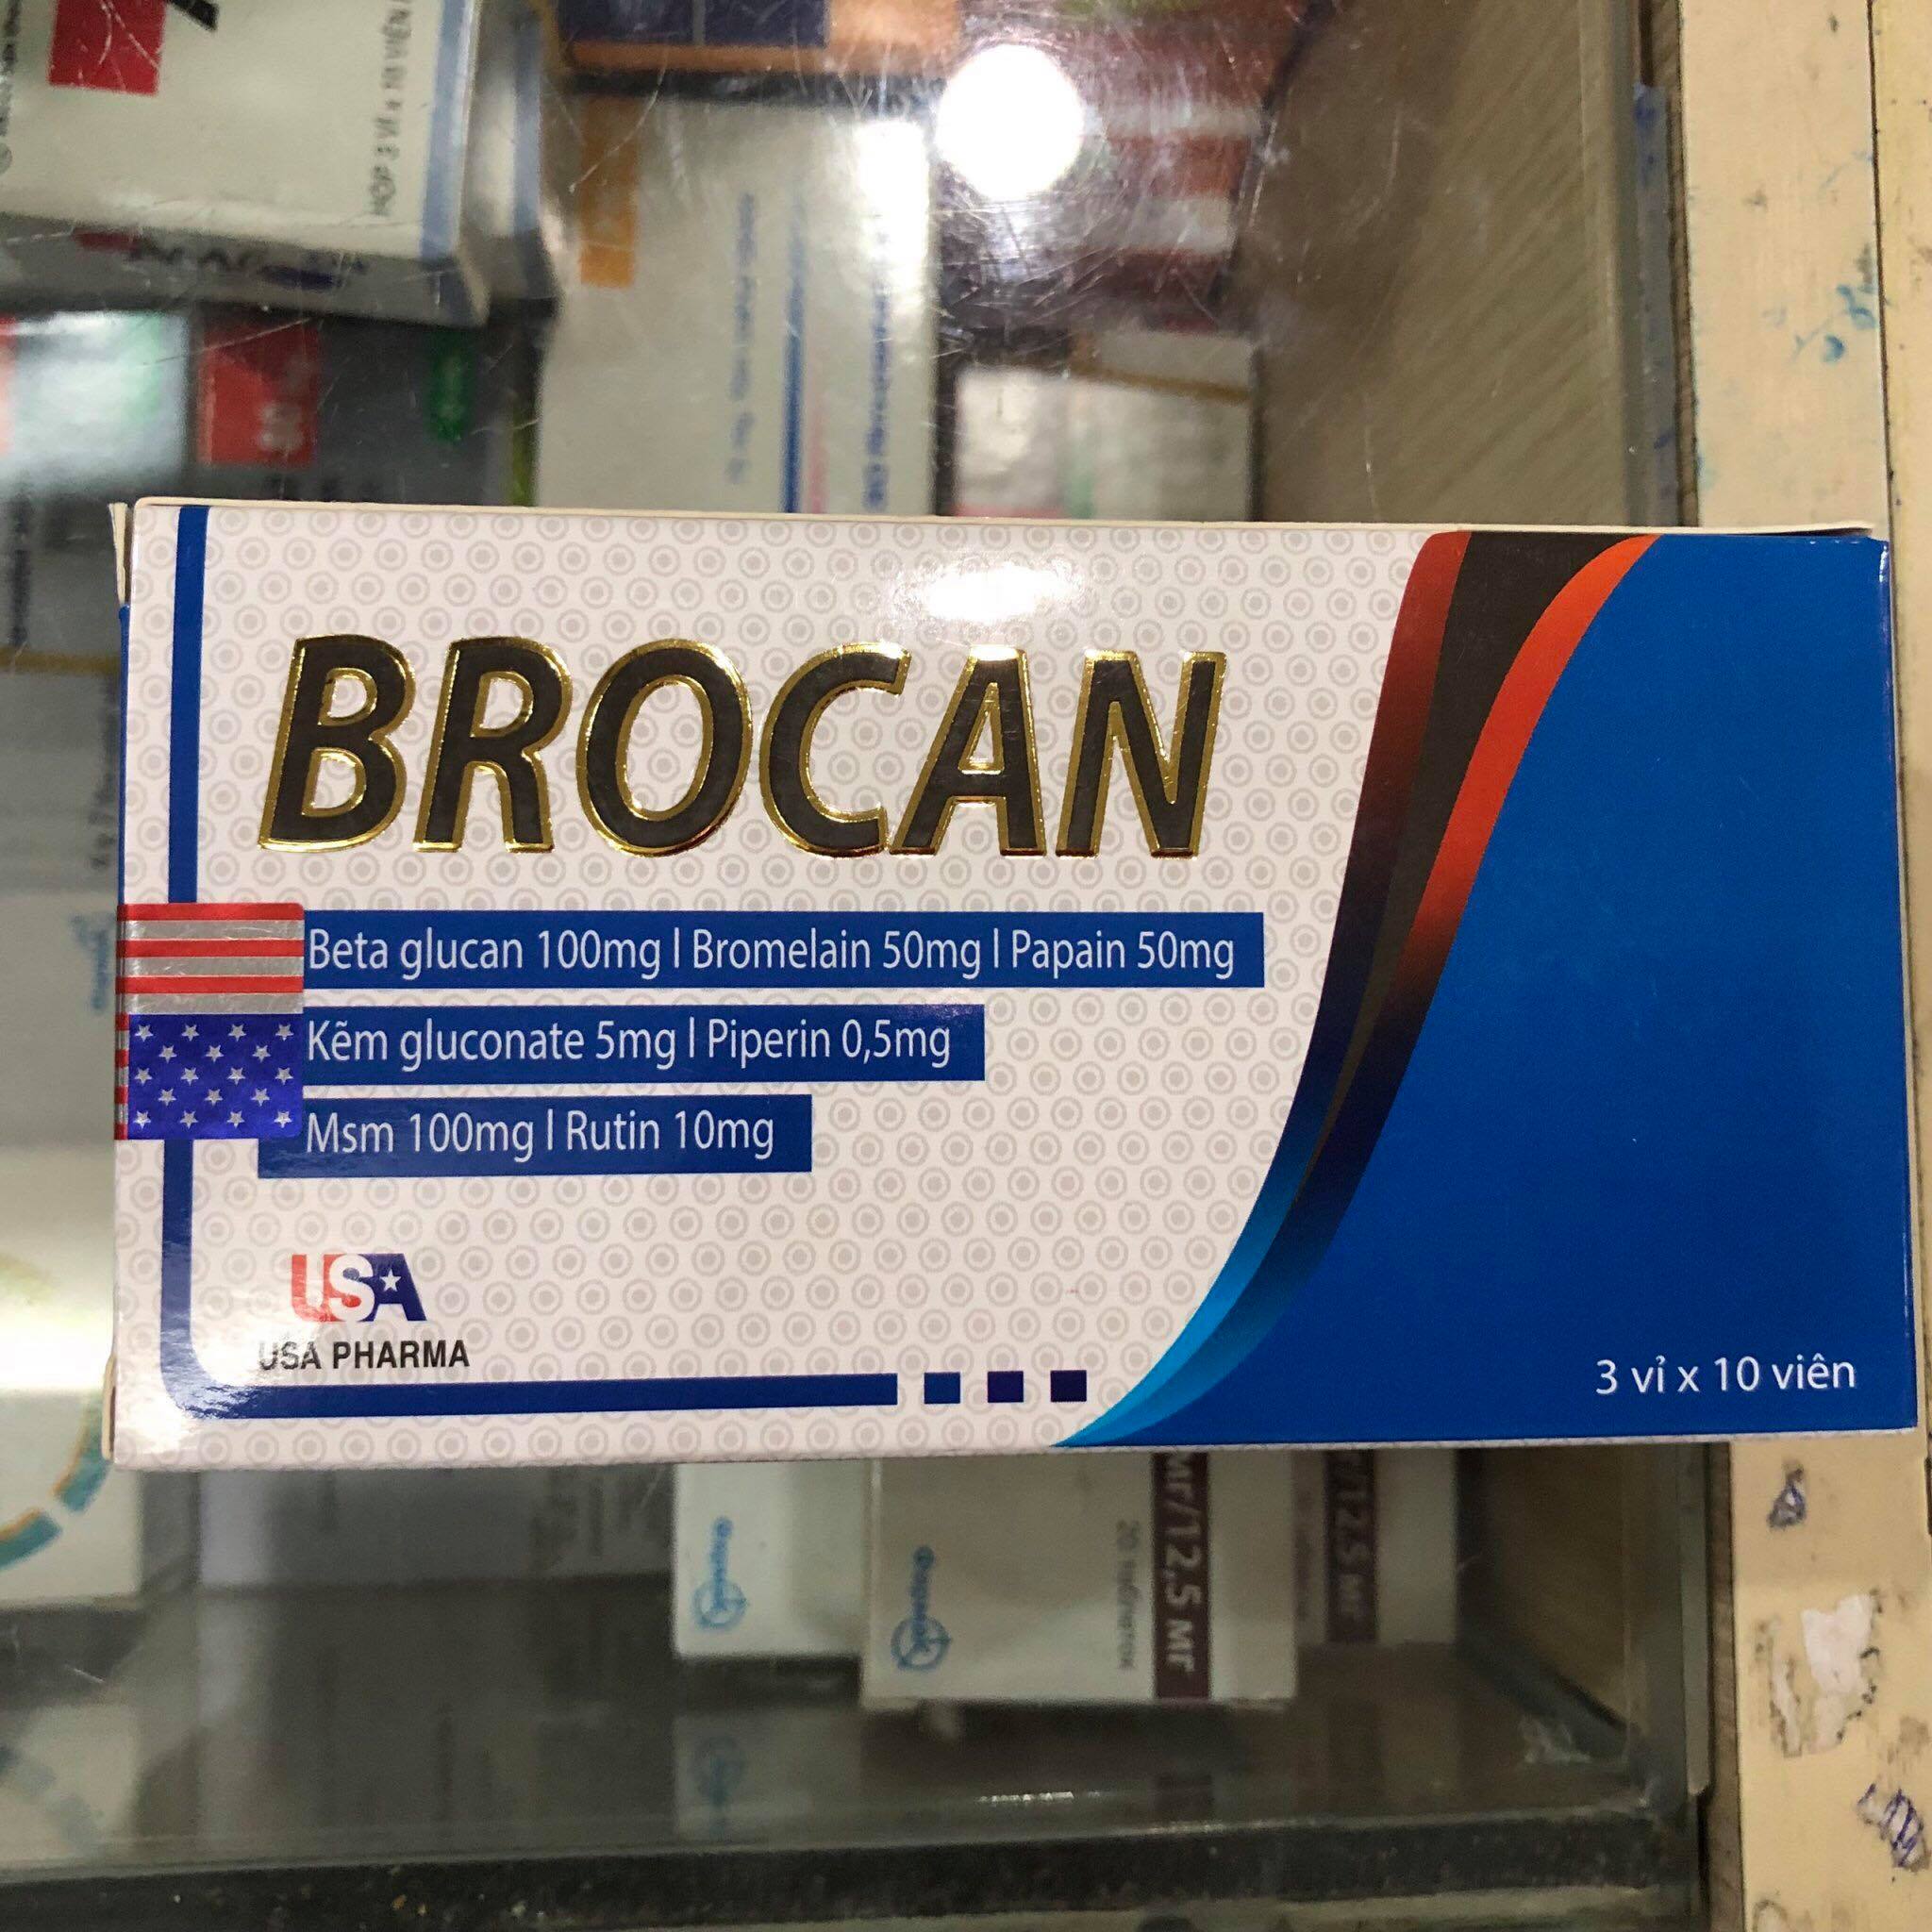 Brocan